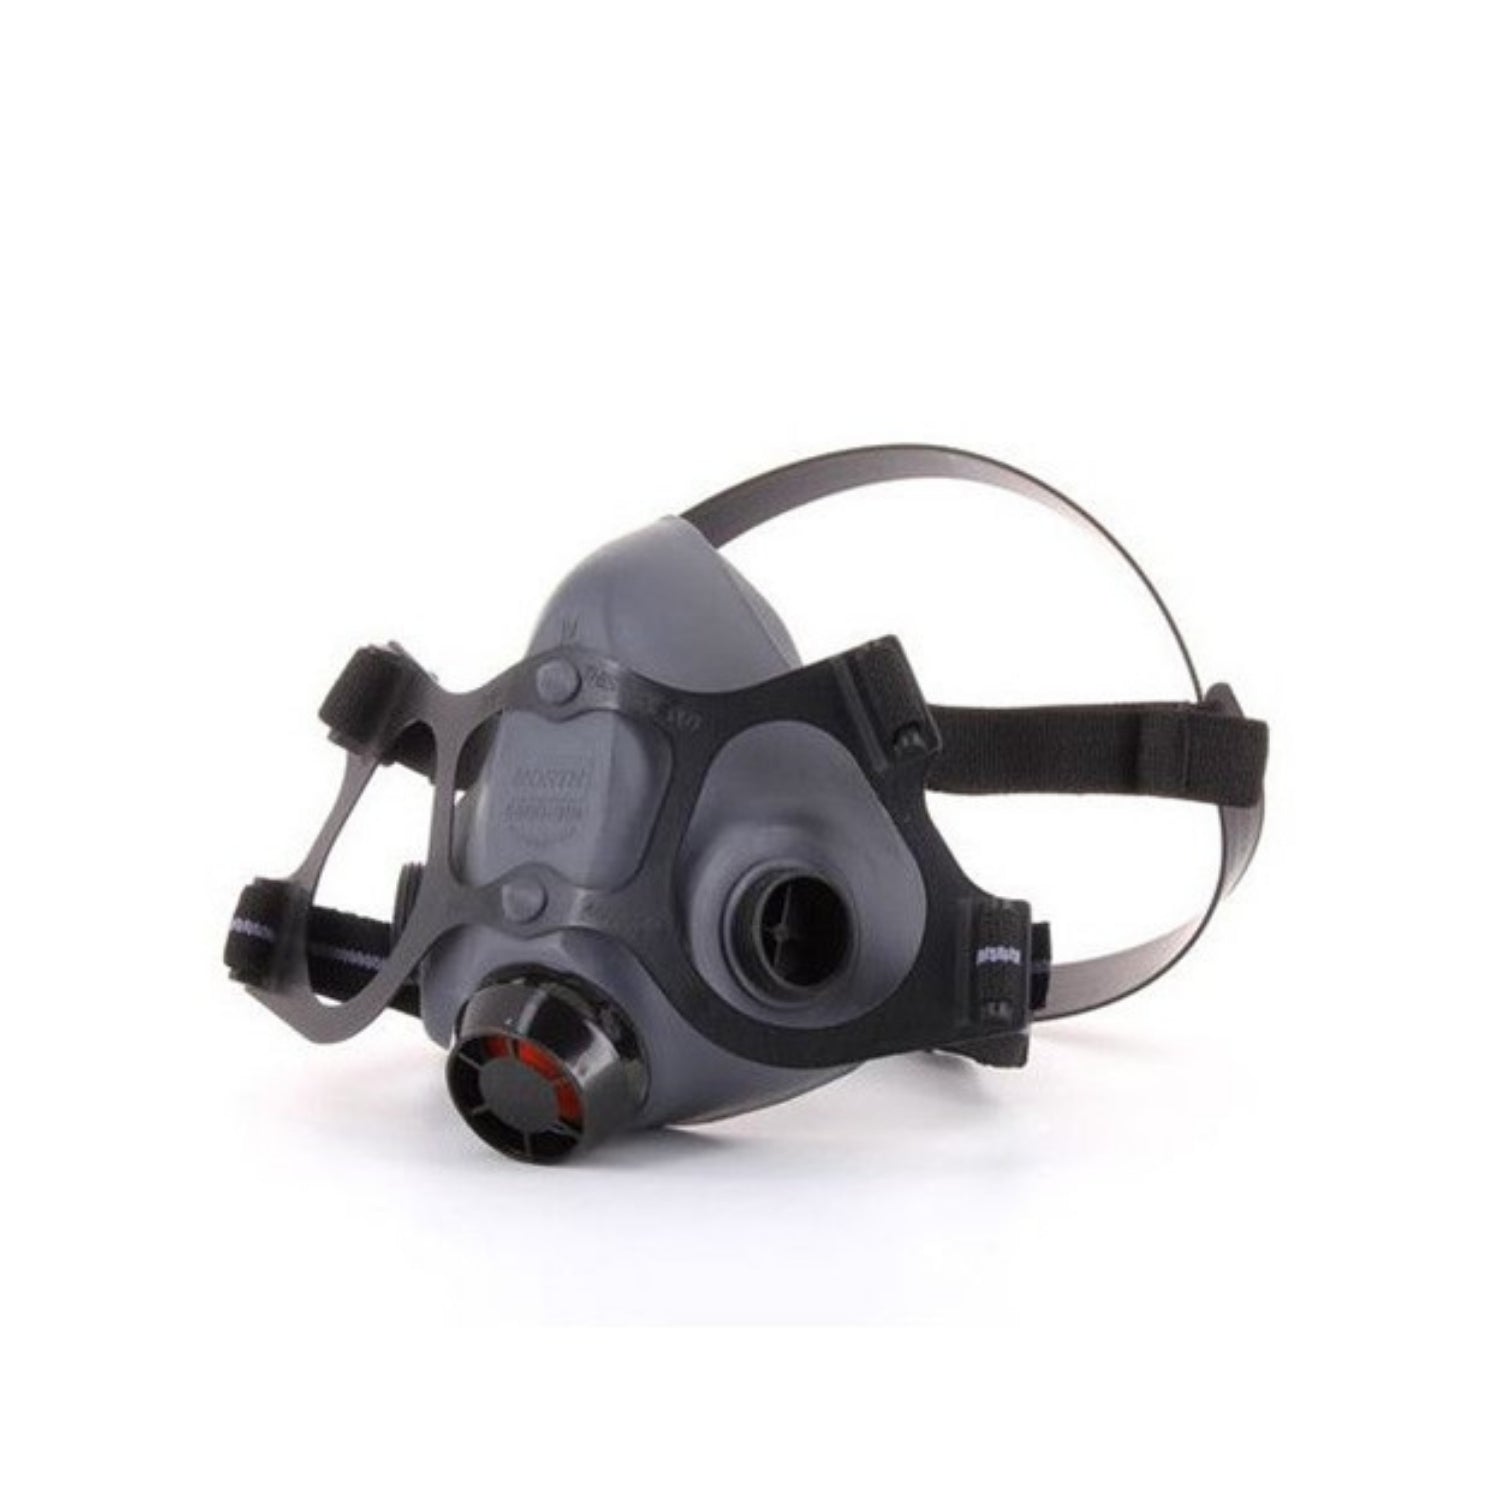 HONEYWELL 5500 Low Maintenance Half Mask Respirator - Size Small